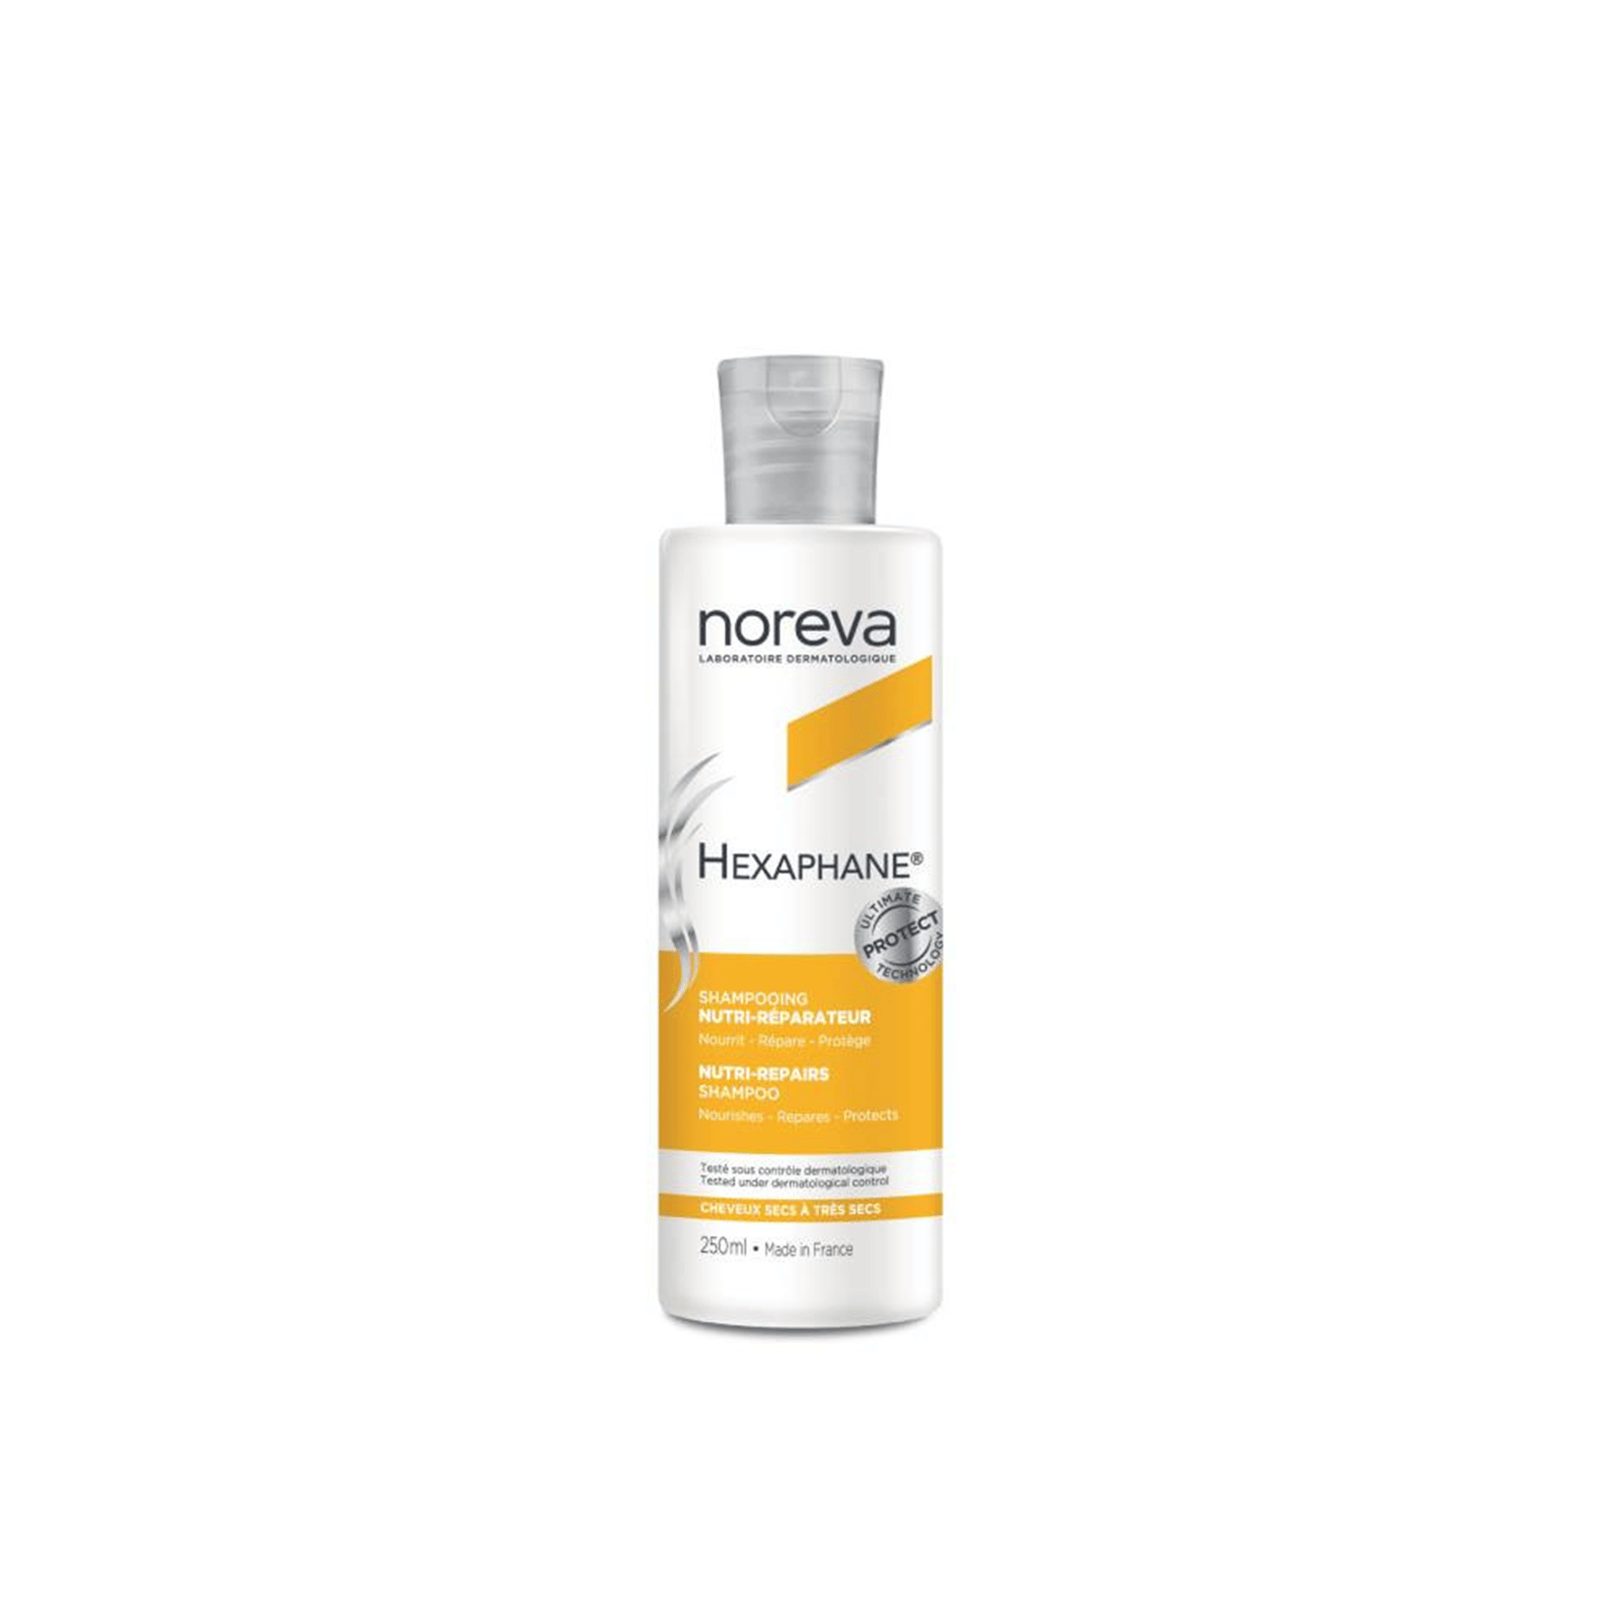 Noreva Hexaphane Nutri-Repair Shampoo 250ml (8.5 fl oz)